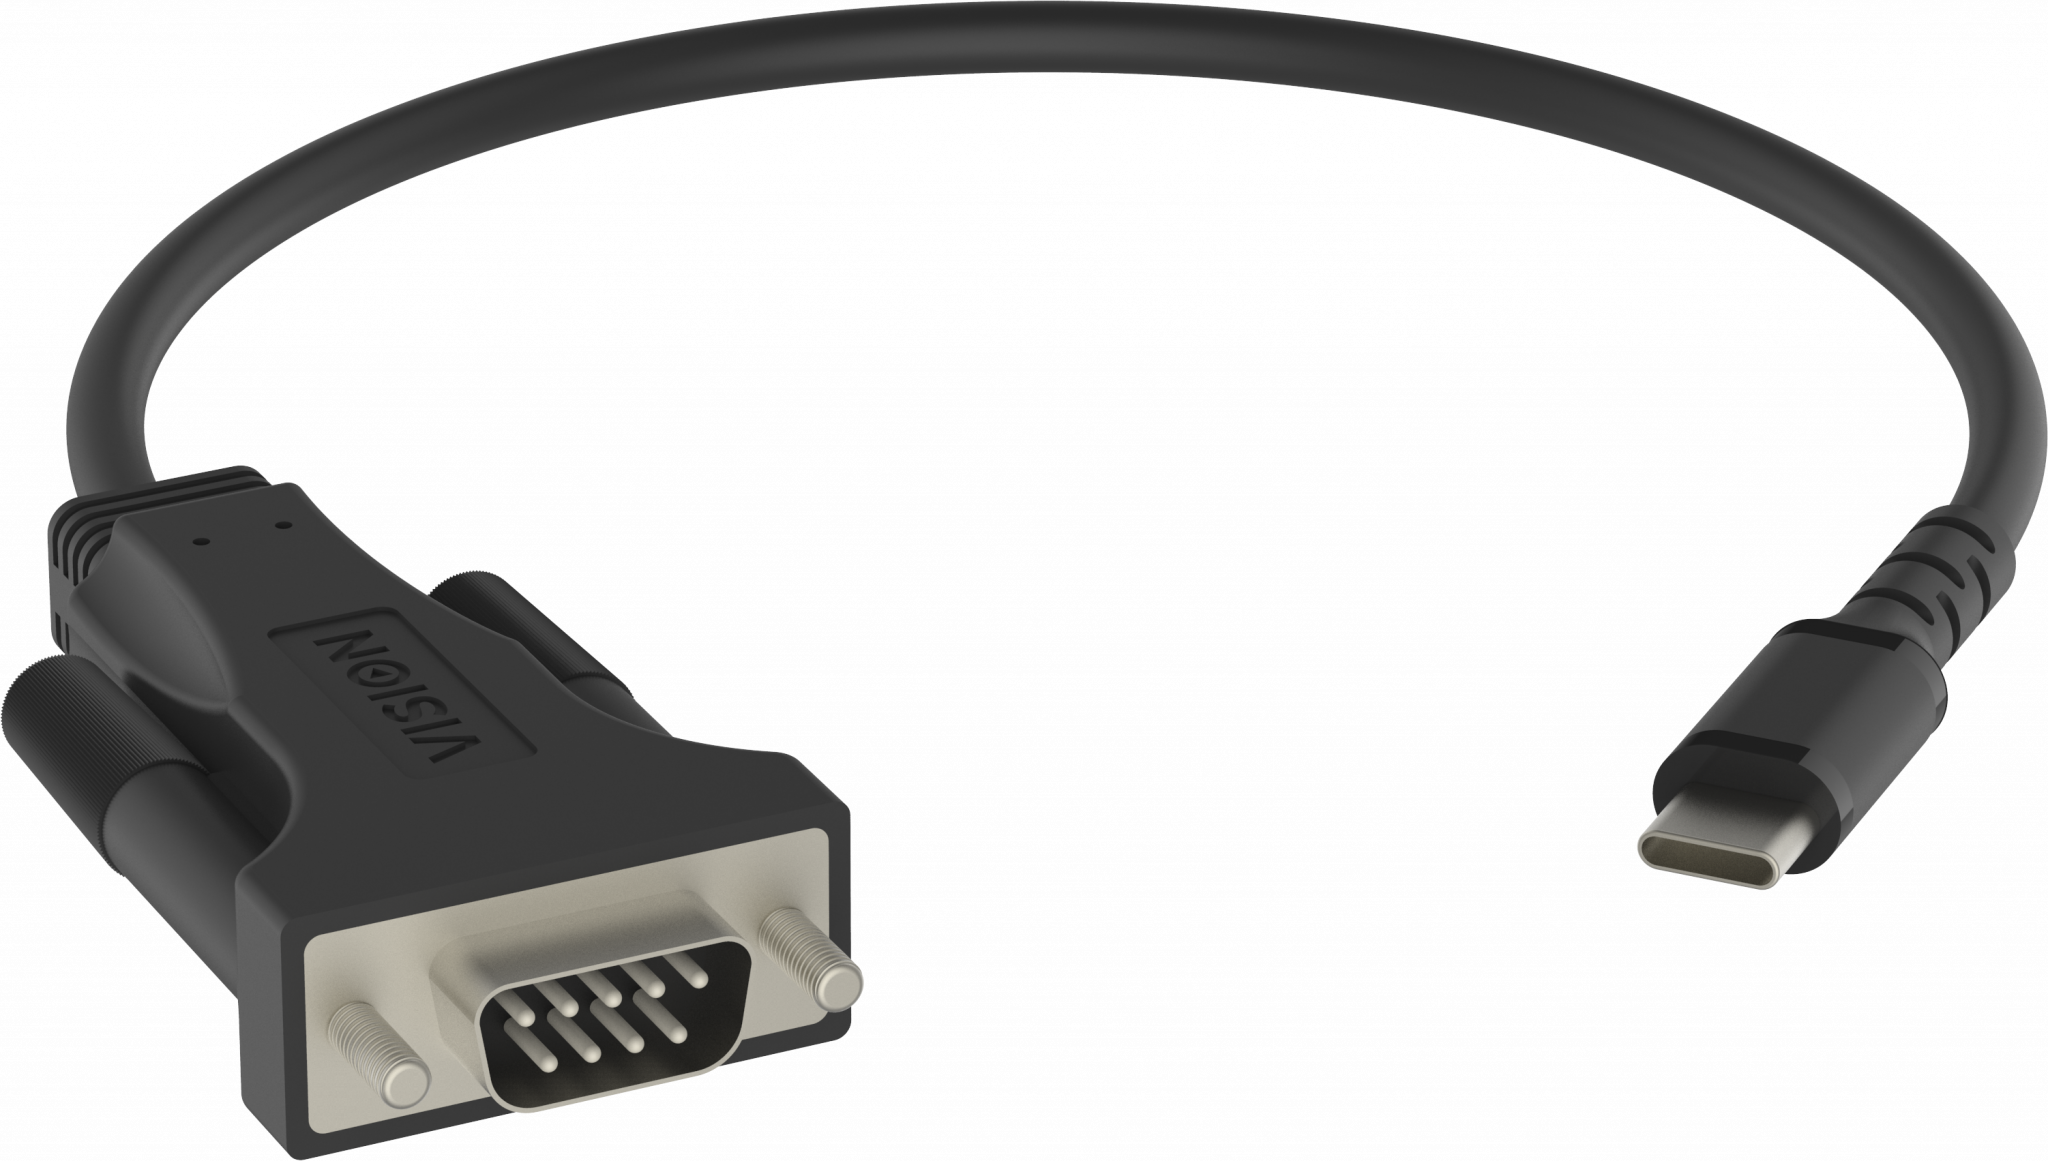 An image showing Adattatore professionale da USB-C 2.0 a seriale RS-232 a 9 pin nero